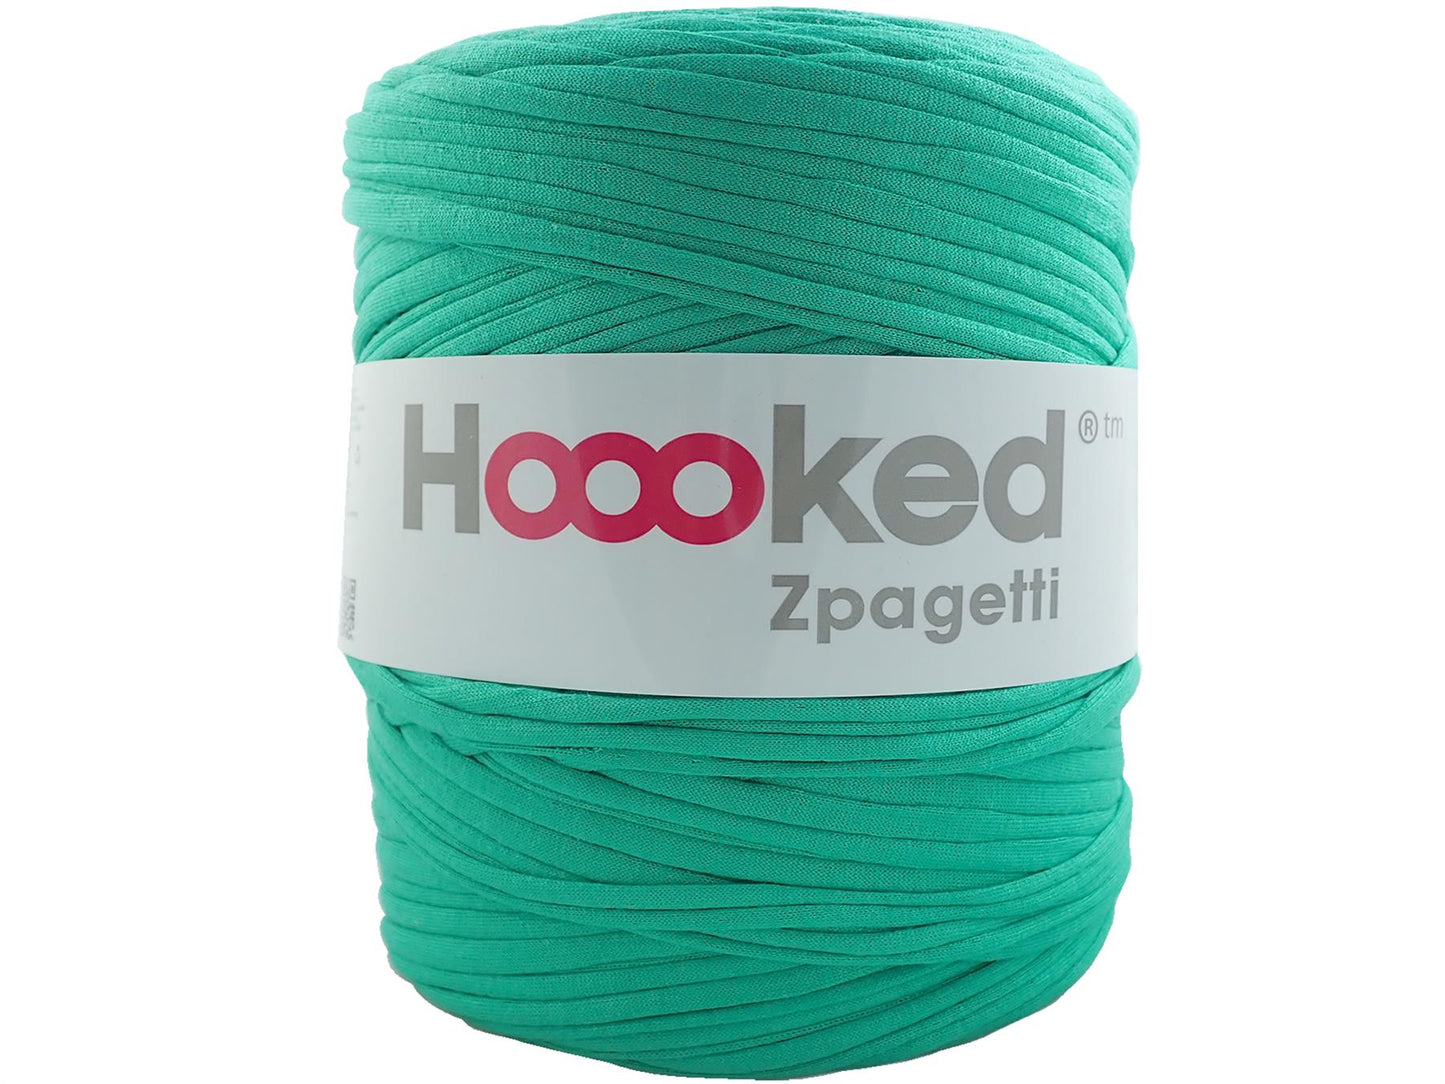 Hoooked Zpagetti Bright Green Cotton T-Shirt Yarn - 120M 700g